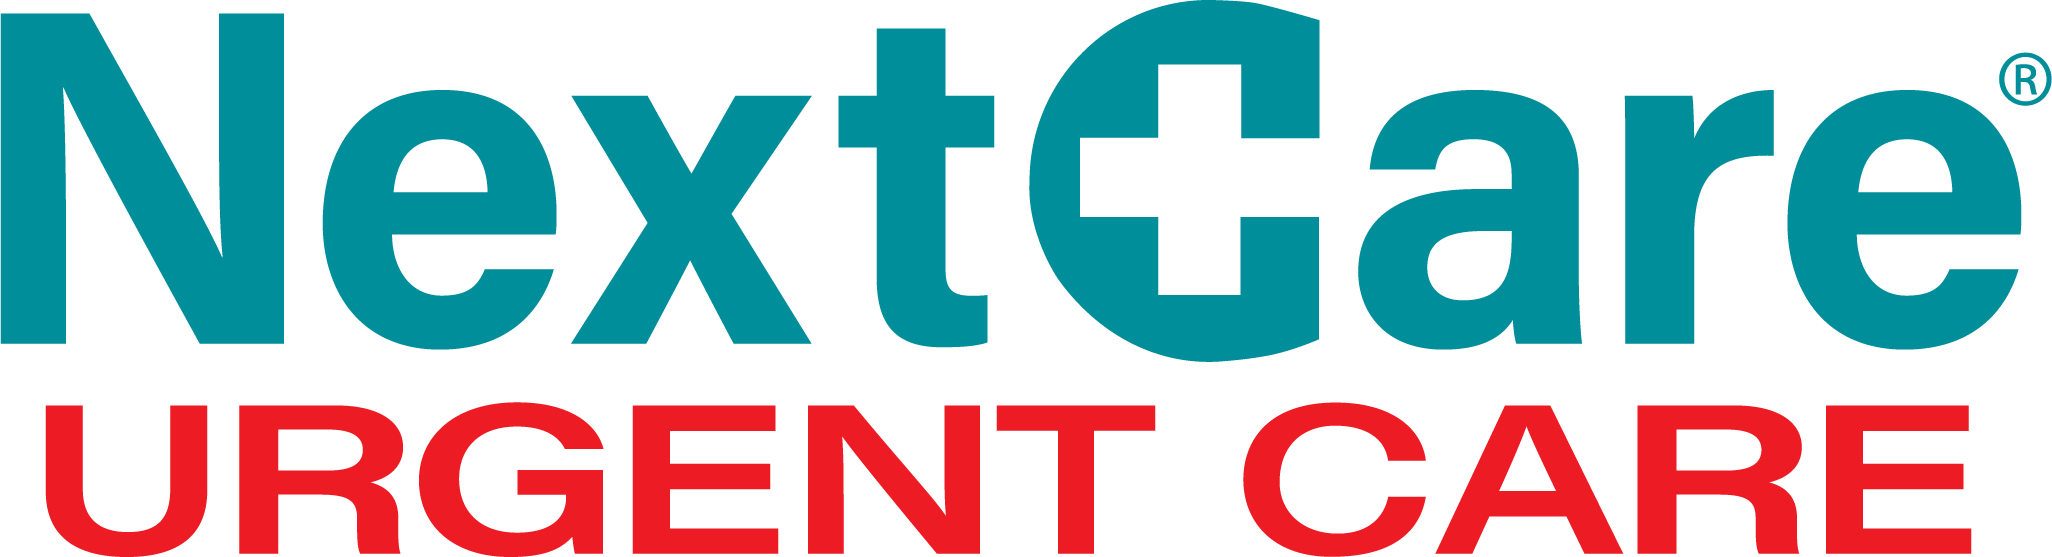 NextCare Urgent Care - Fayetteville Logo